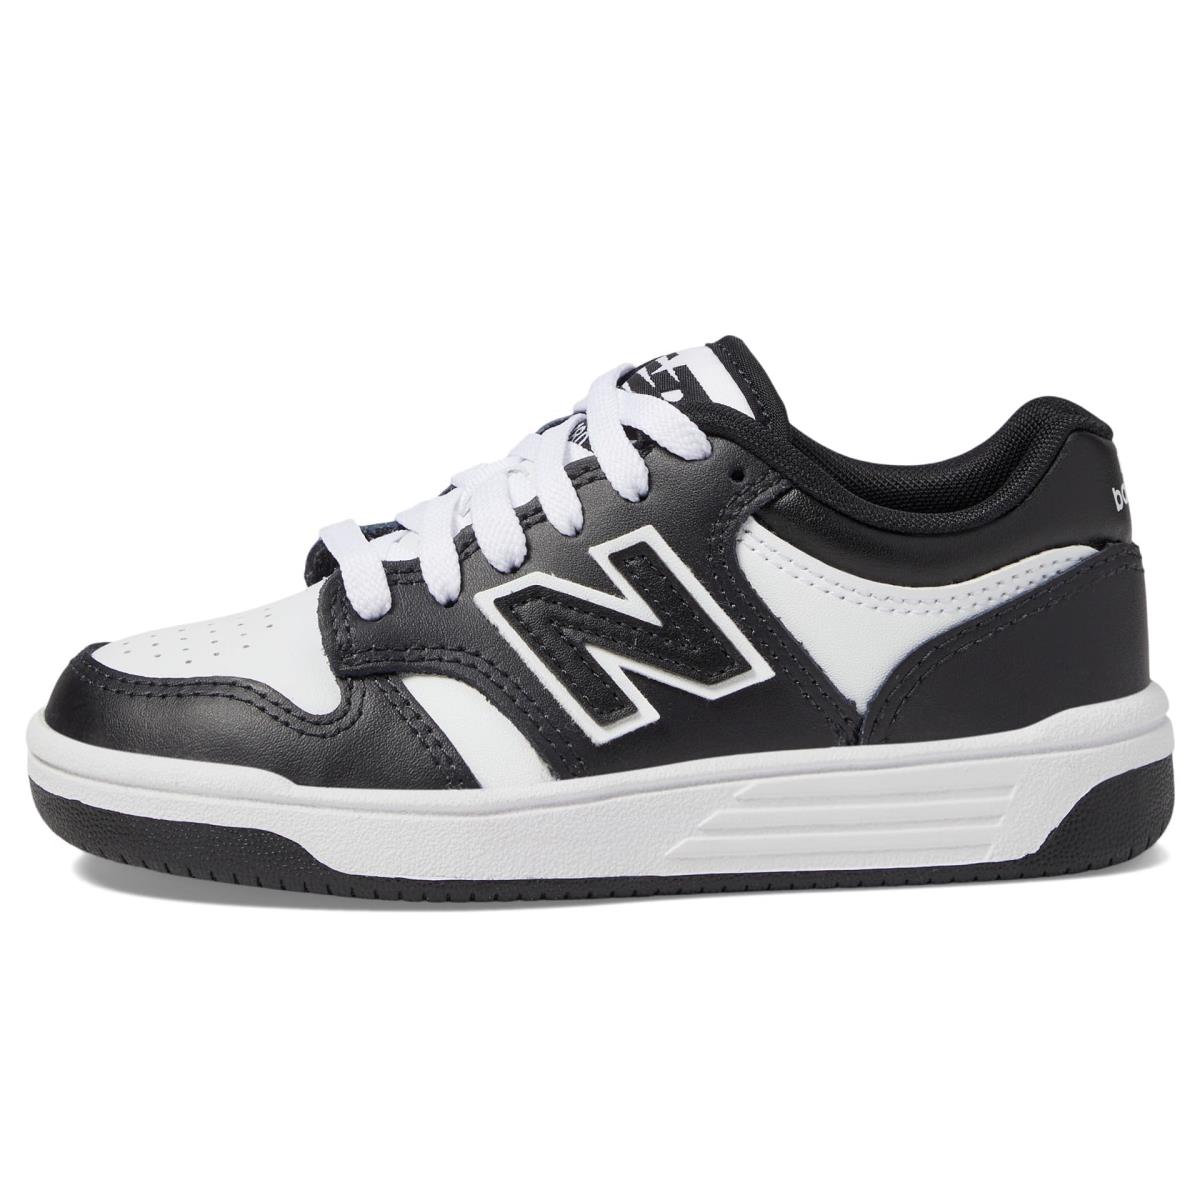 New Balance Unisex-child 480 V1 Lace-up Sneaker Black/White